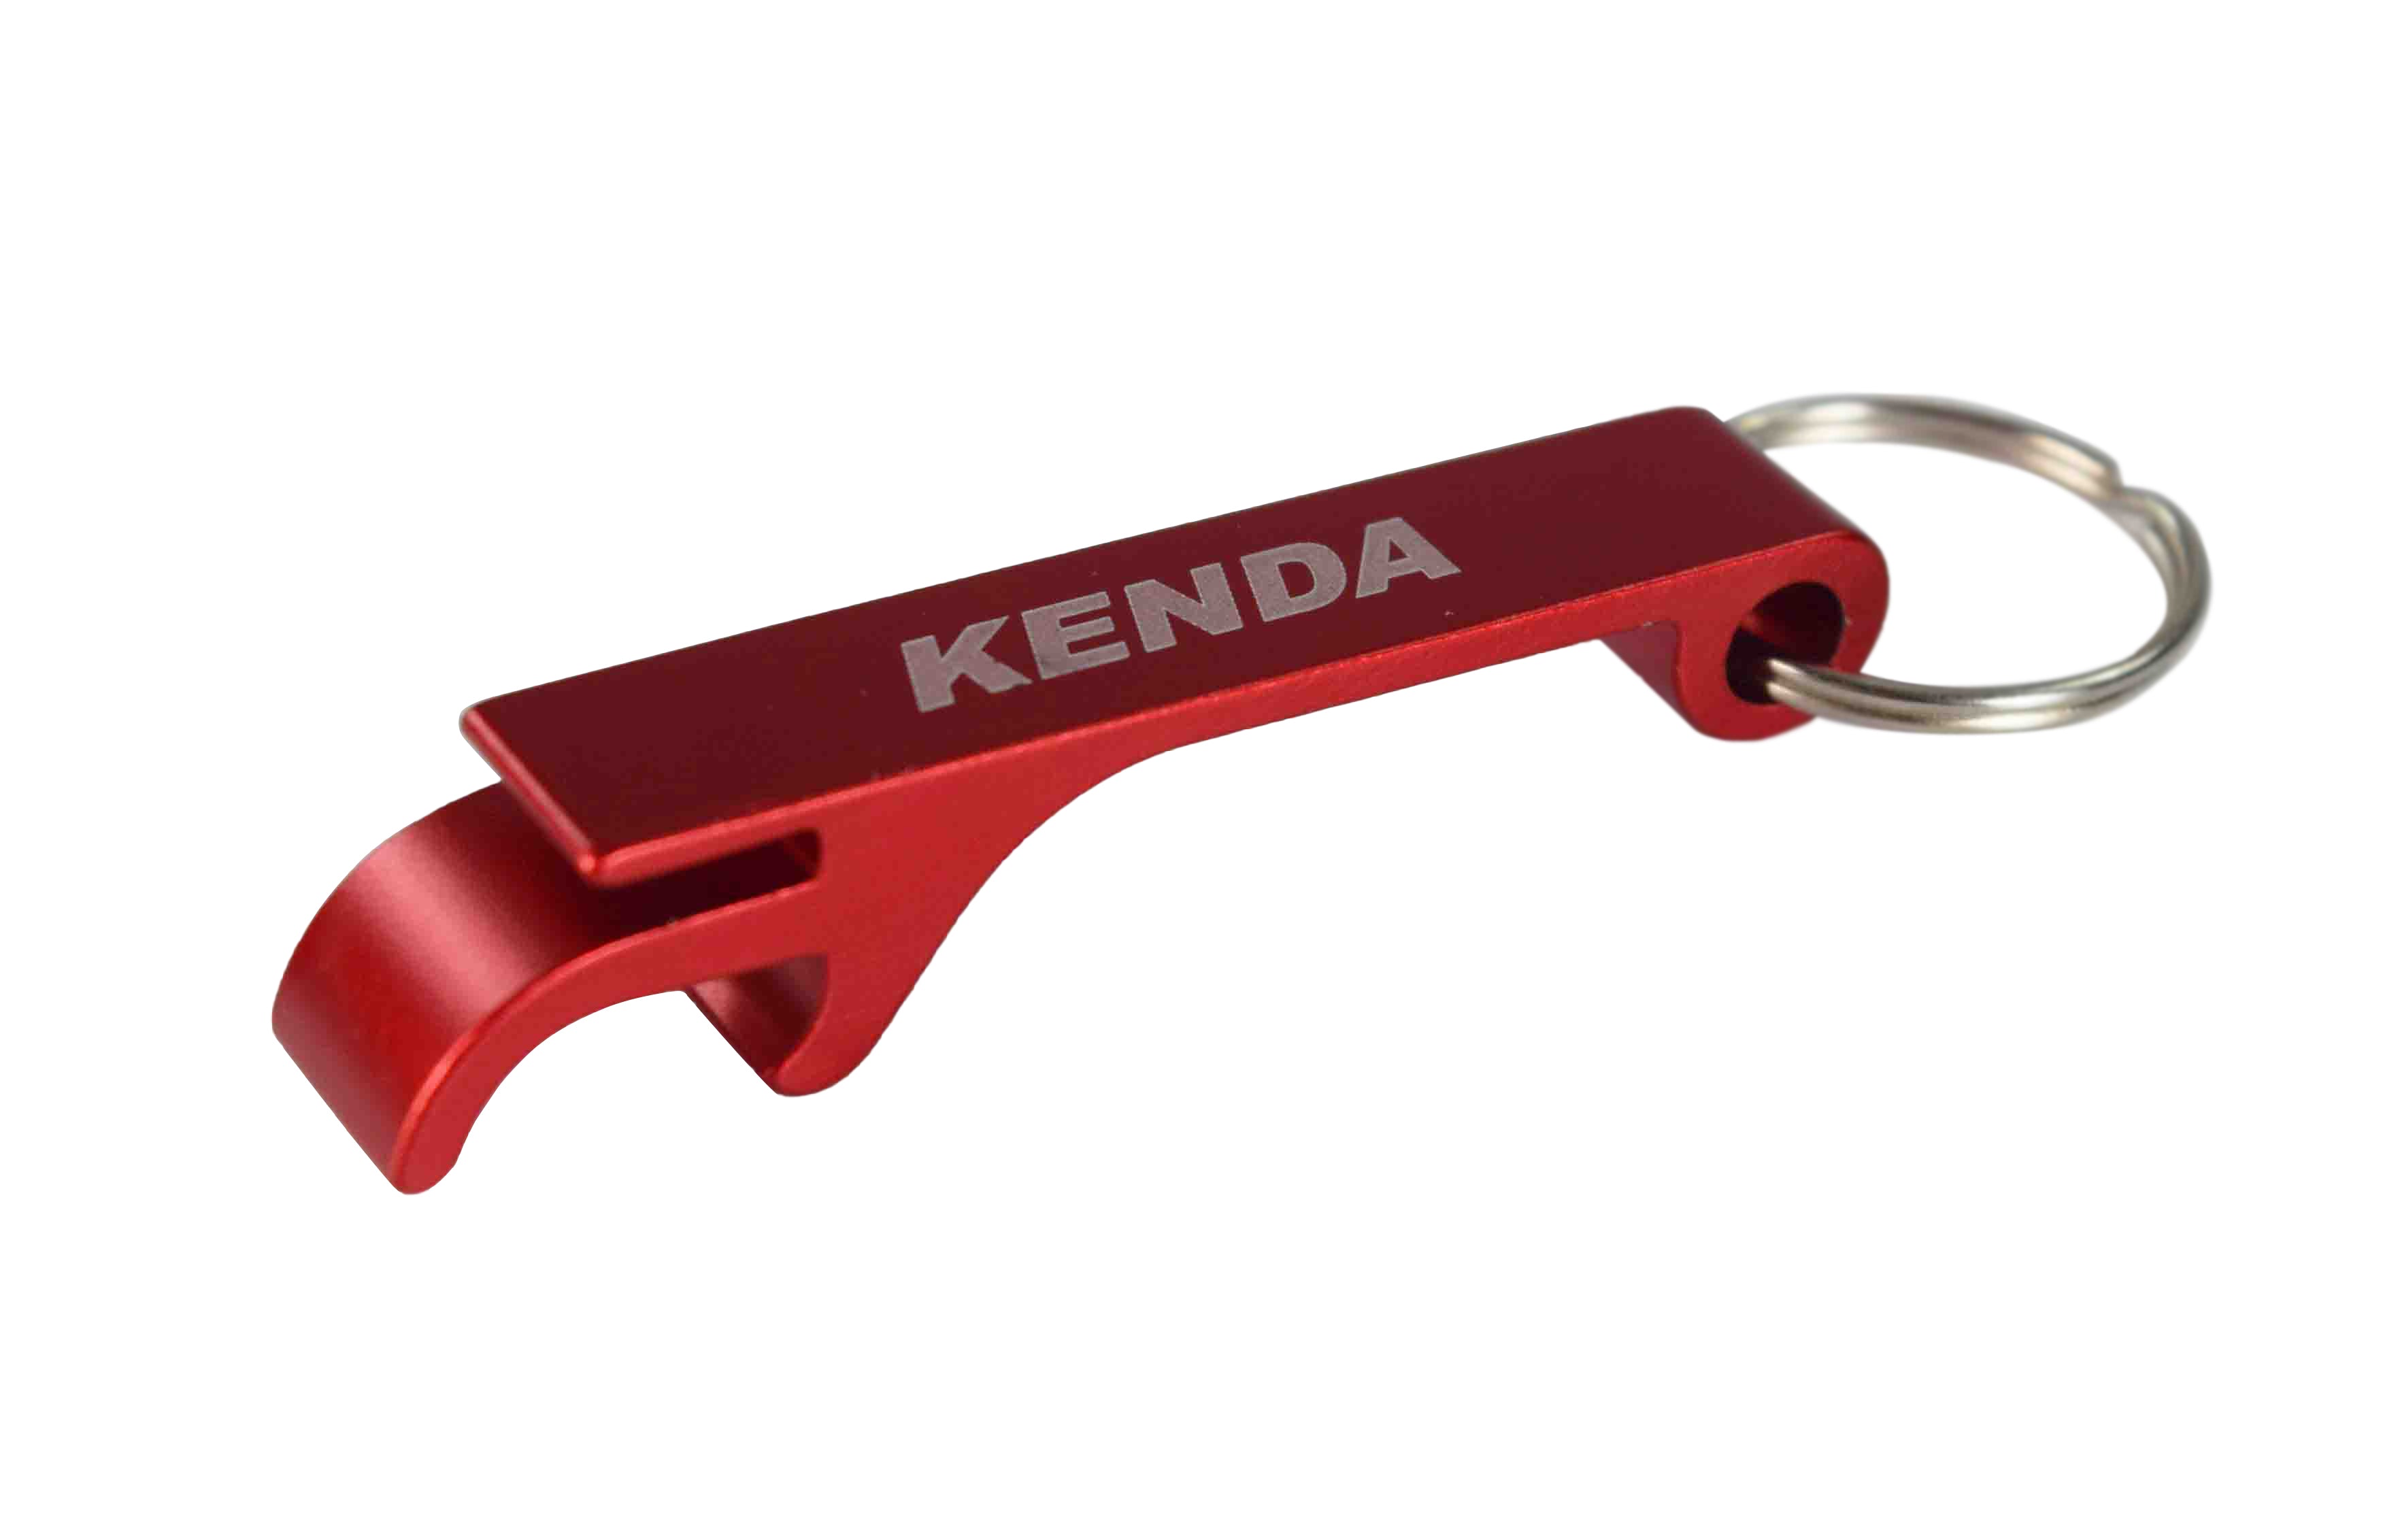 Kenda Hole-N-1 20x9-12 Single Golf Cart Tire with Kenda Key Chain Bottle Opener